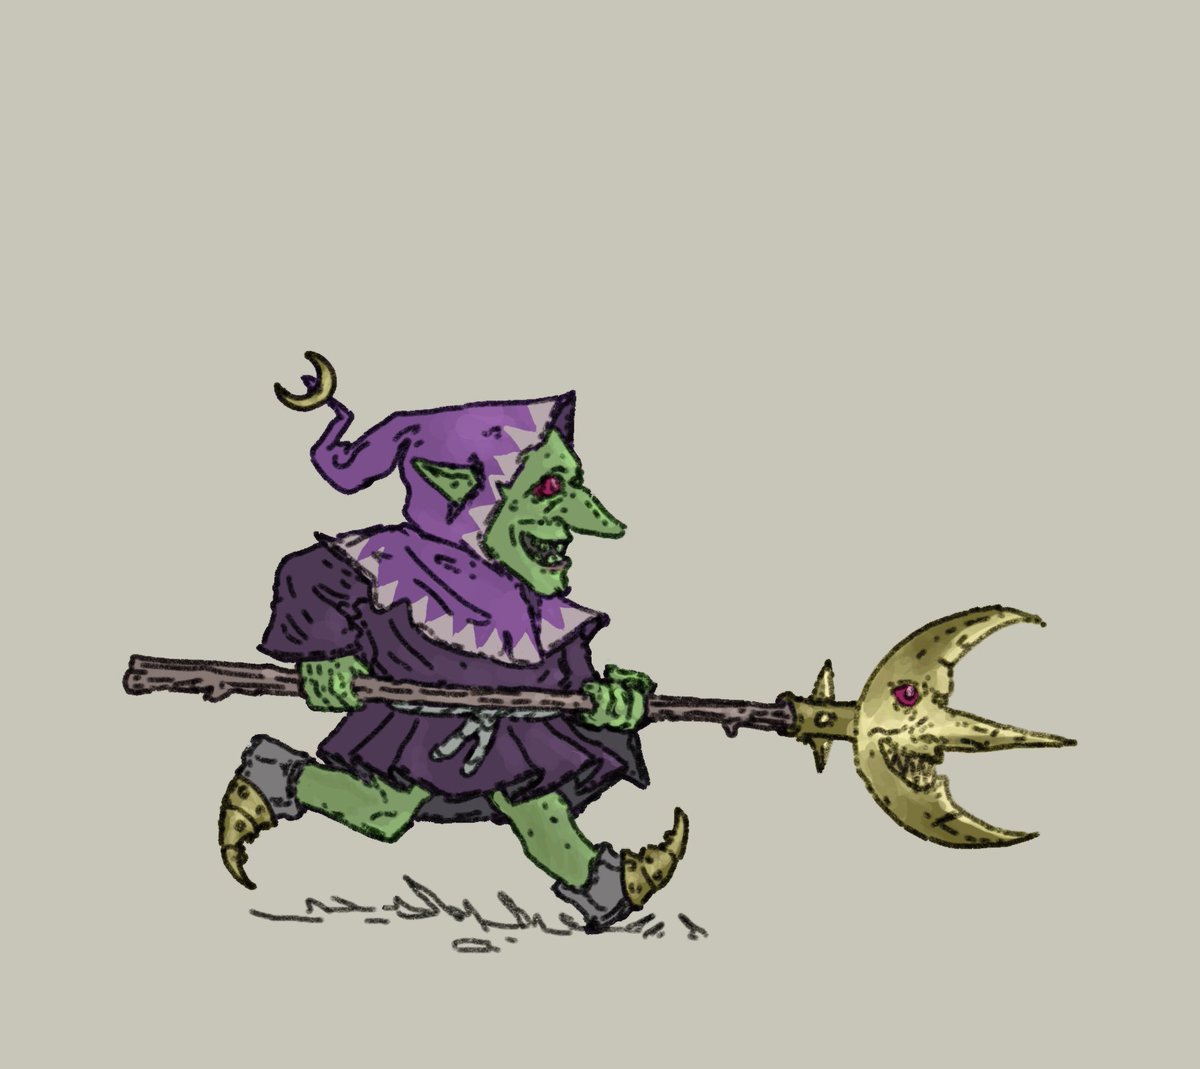 Running goblin doodle